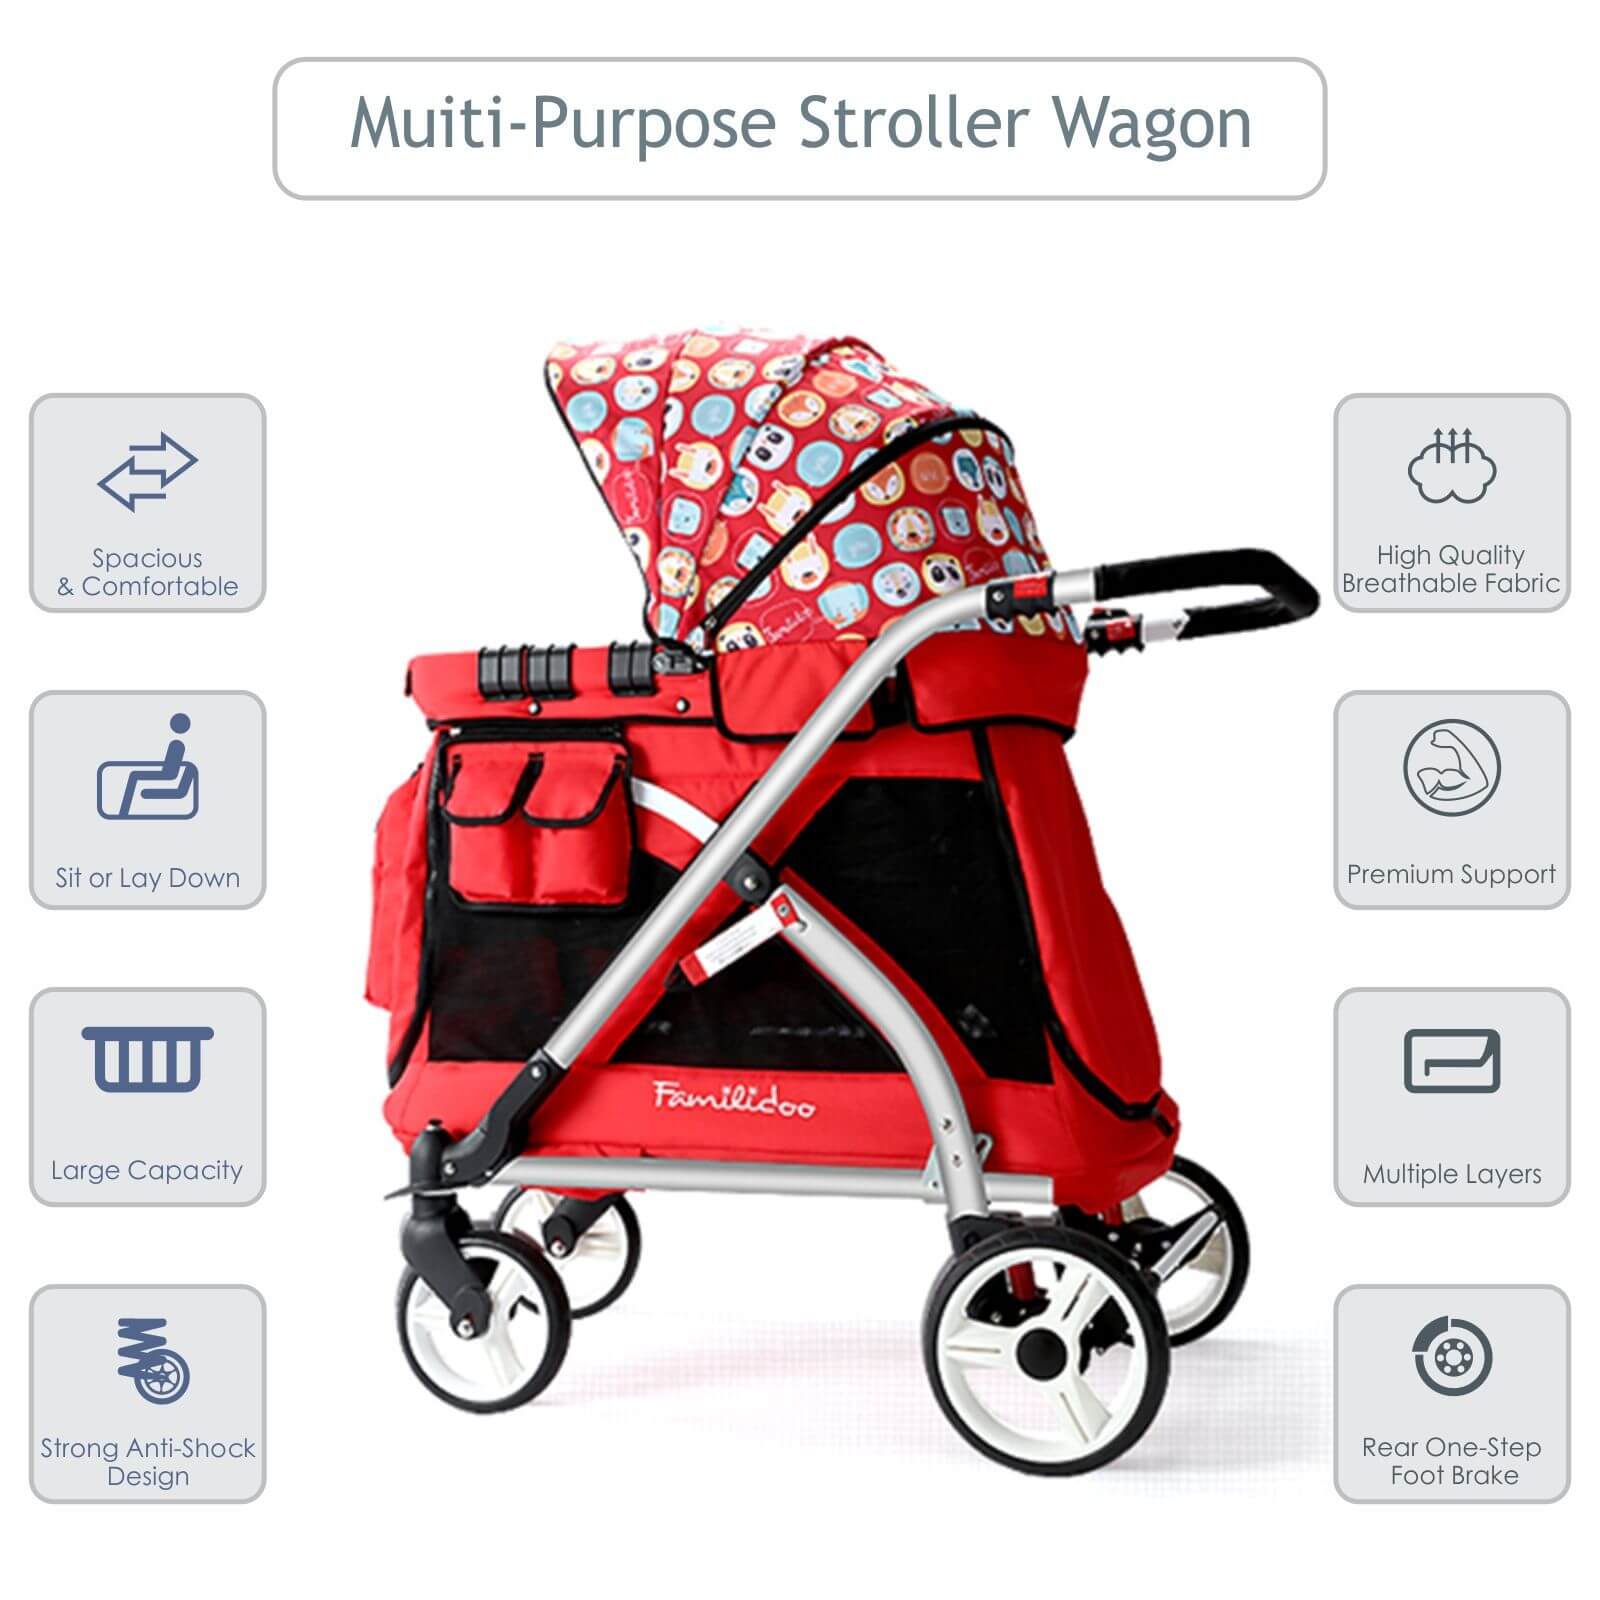 MJ01 Chariot Mini (Multi-Function Single Heavy Duty Stroller Wagon, Push Only)